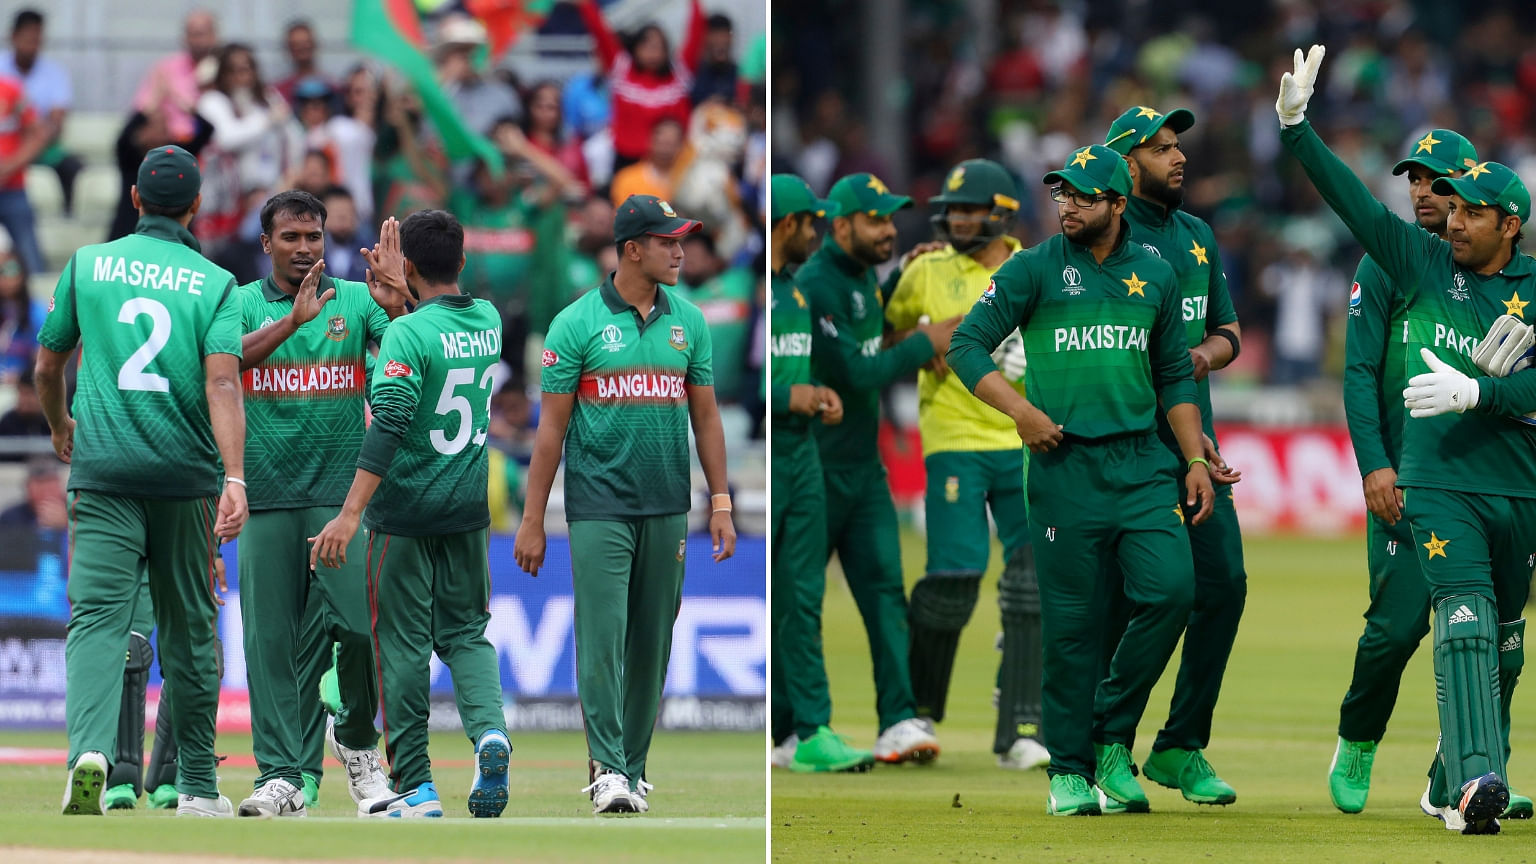 Pakistan Vs Bangladesh Live Score Streaming Online On Dd Sports Star